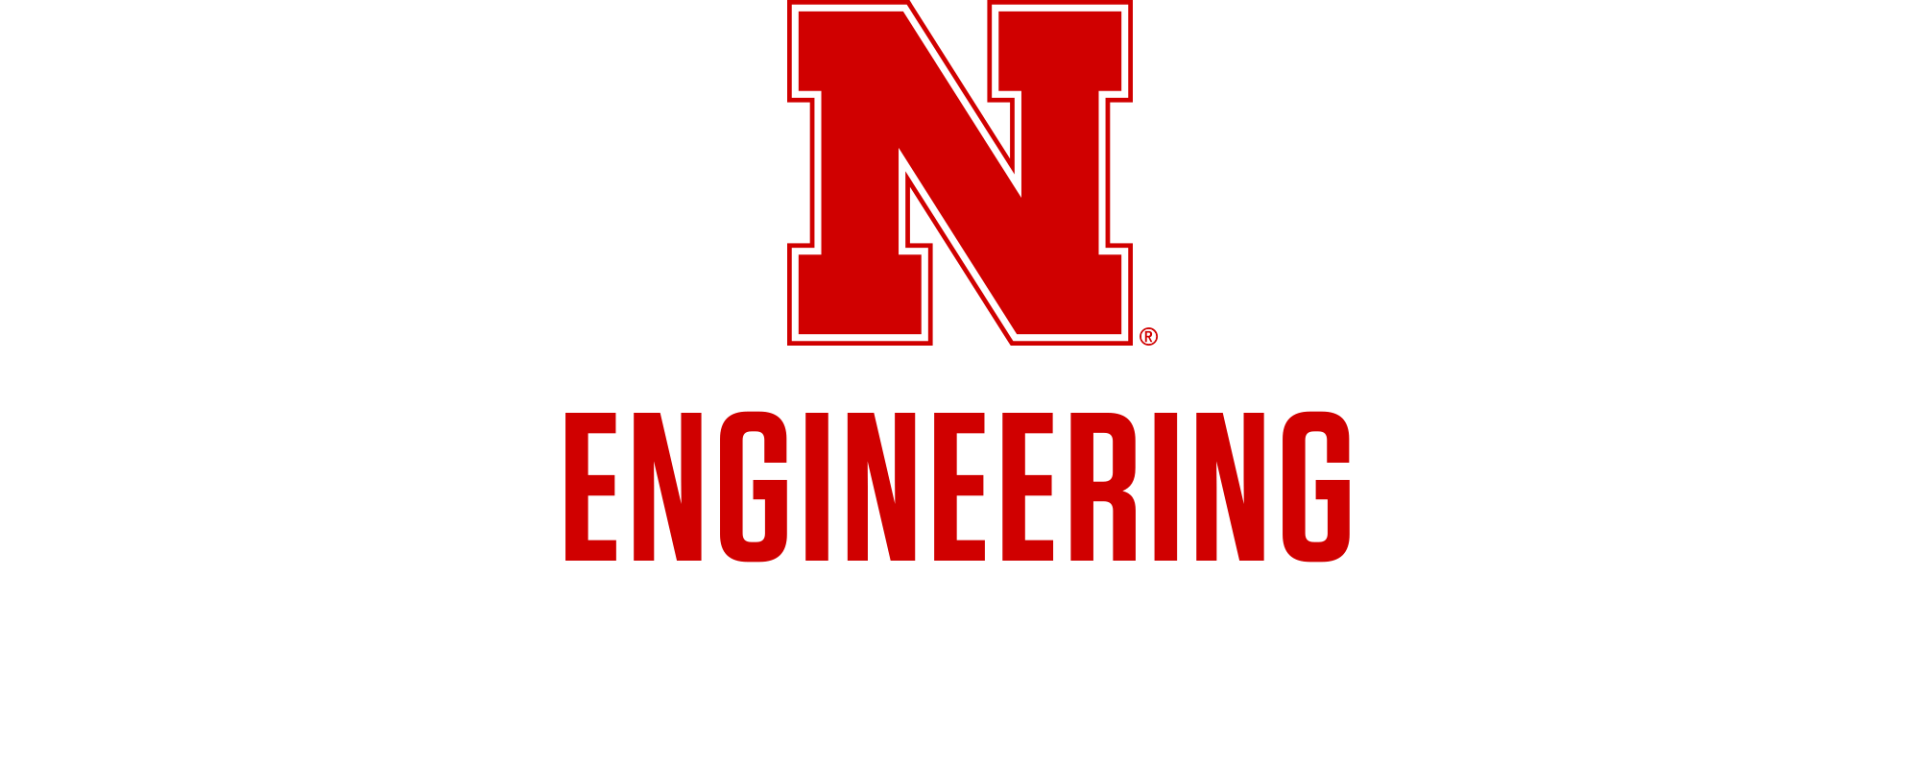 Engineering logo lockup